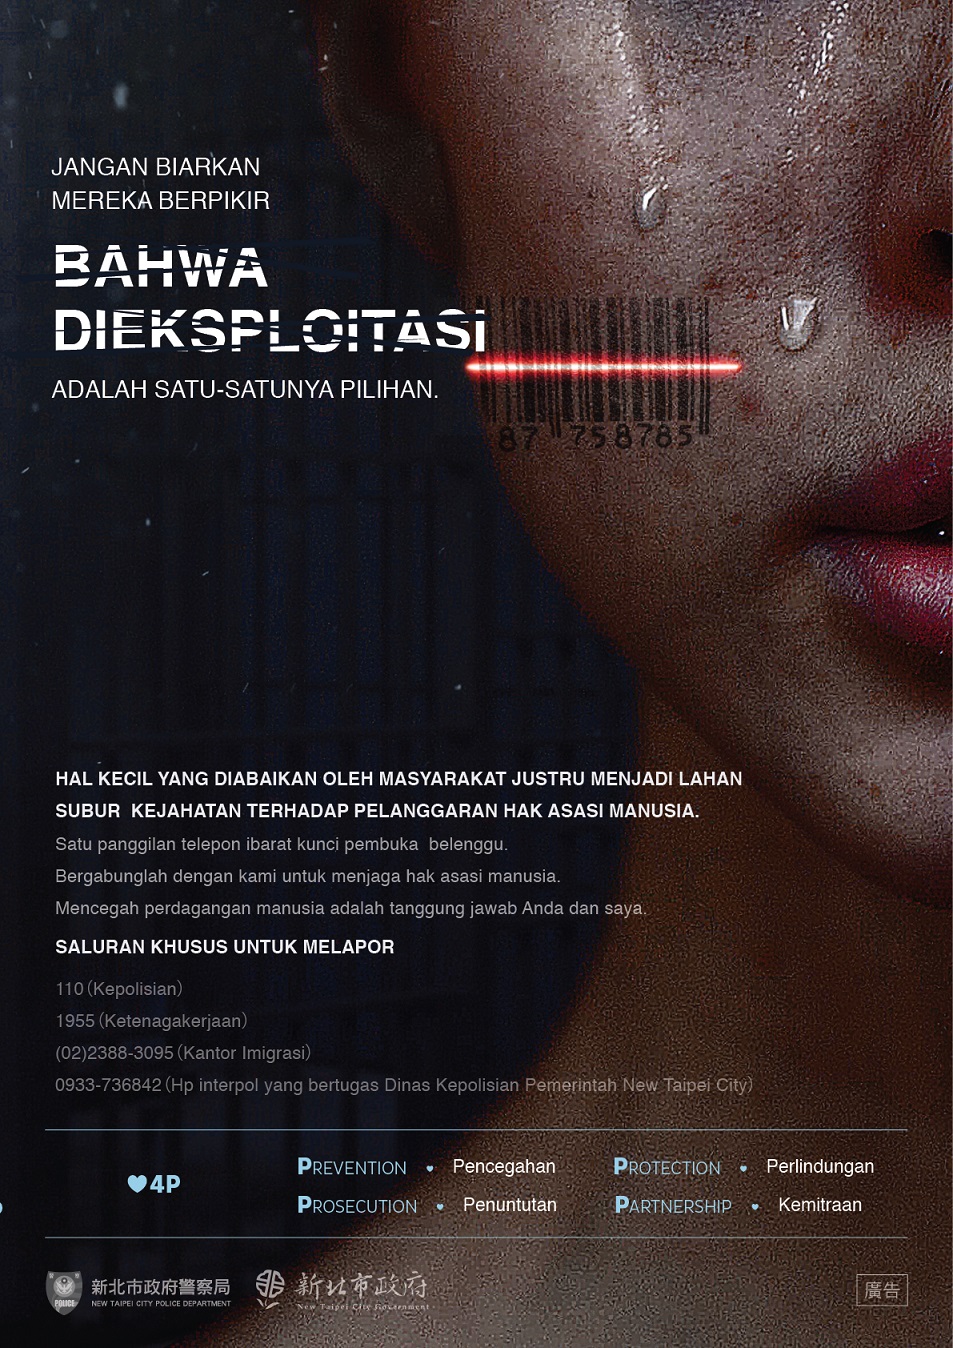 anti-human trafficking Propaganda poster picture in Indonesian